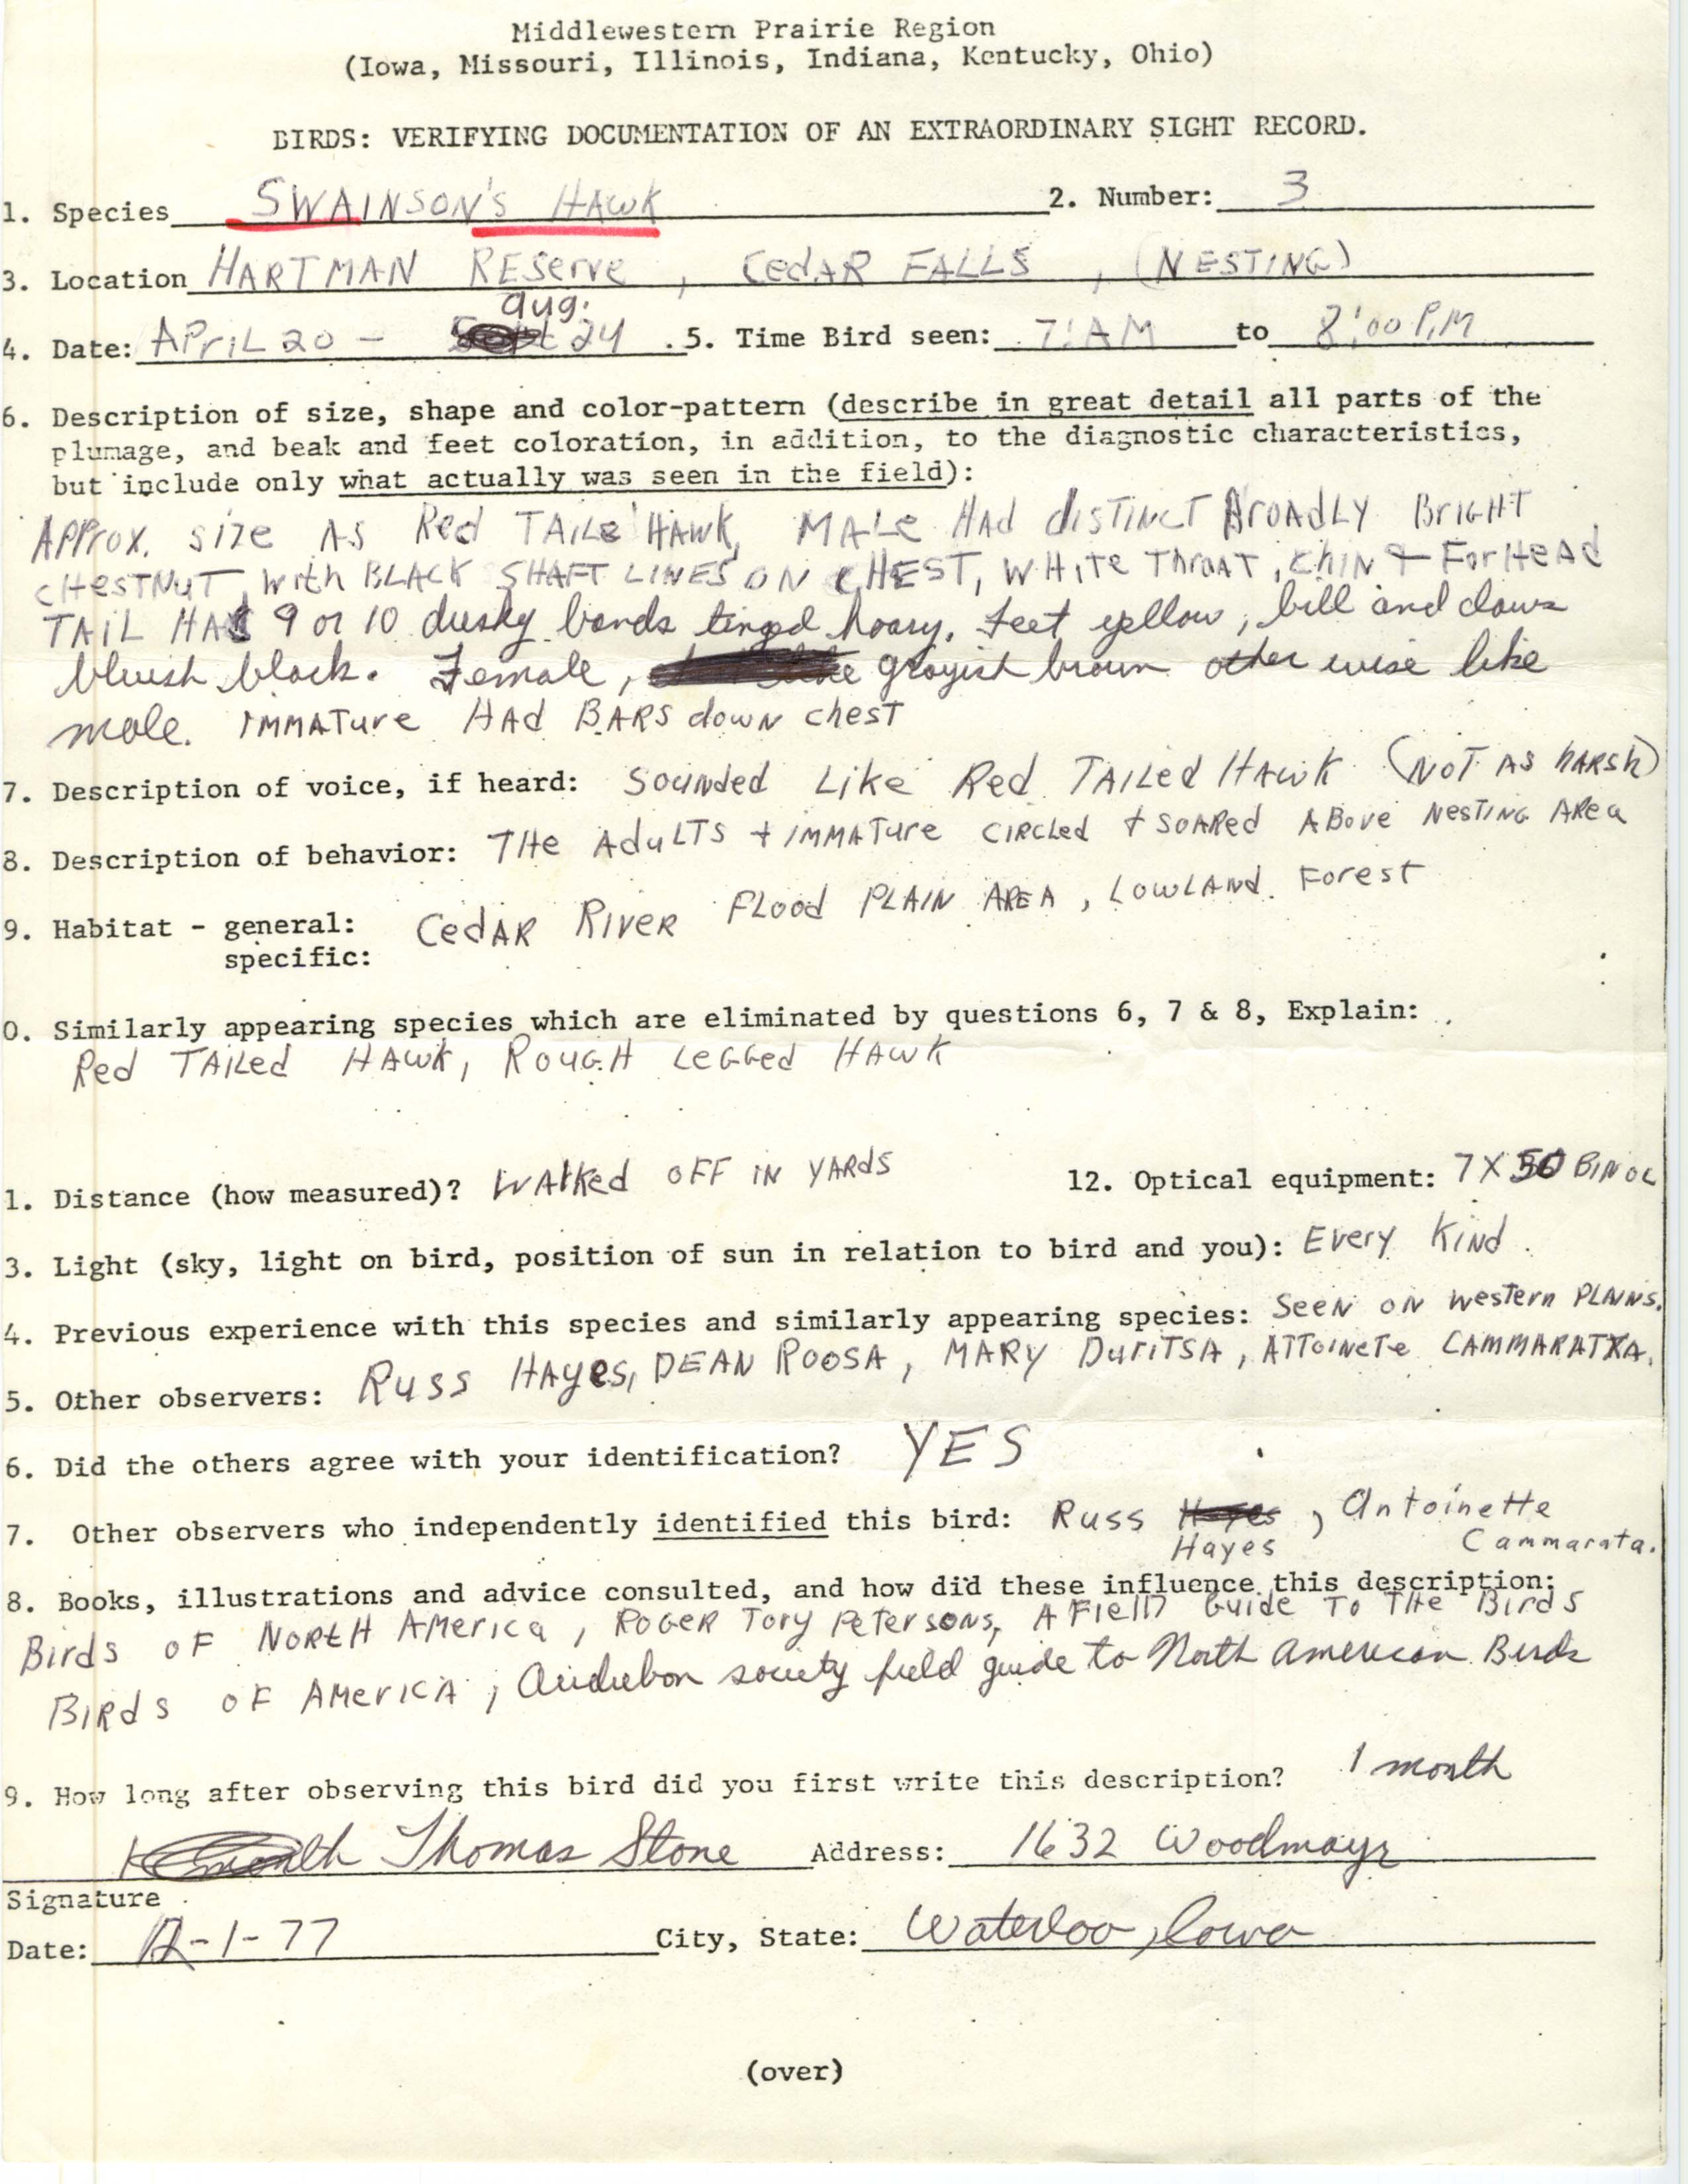 Rare bird documentation form for Swainson's Hawk at Hartman Reserve, 1977